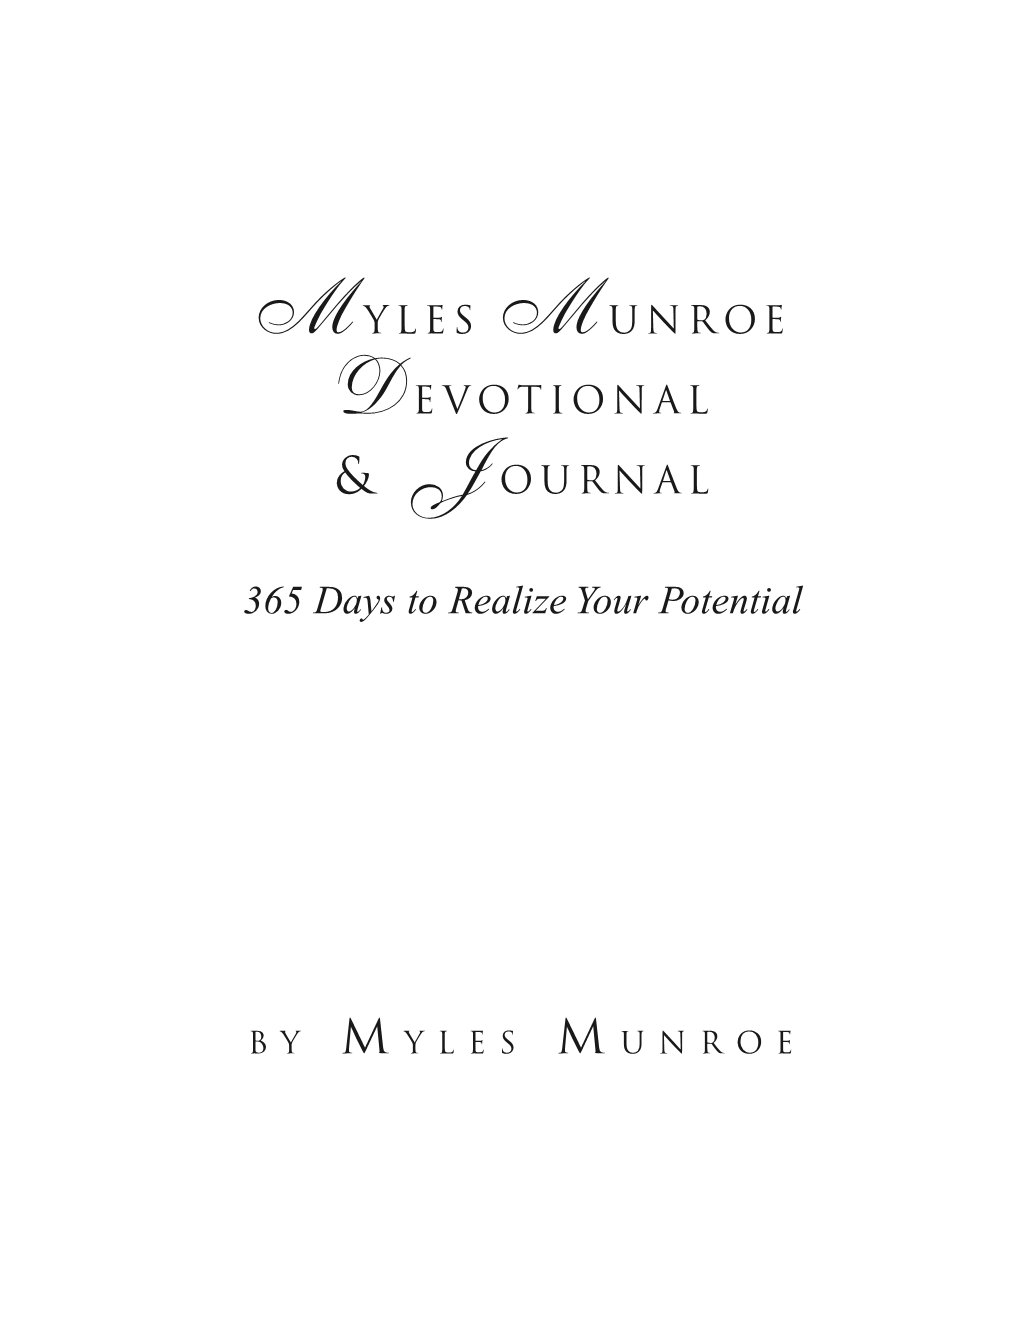 Myles Munroe Devotional